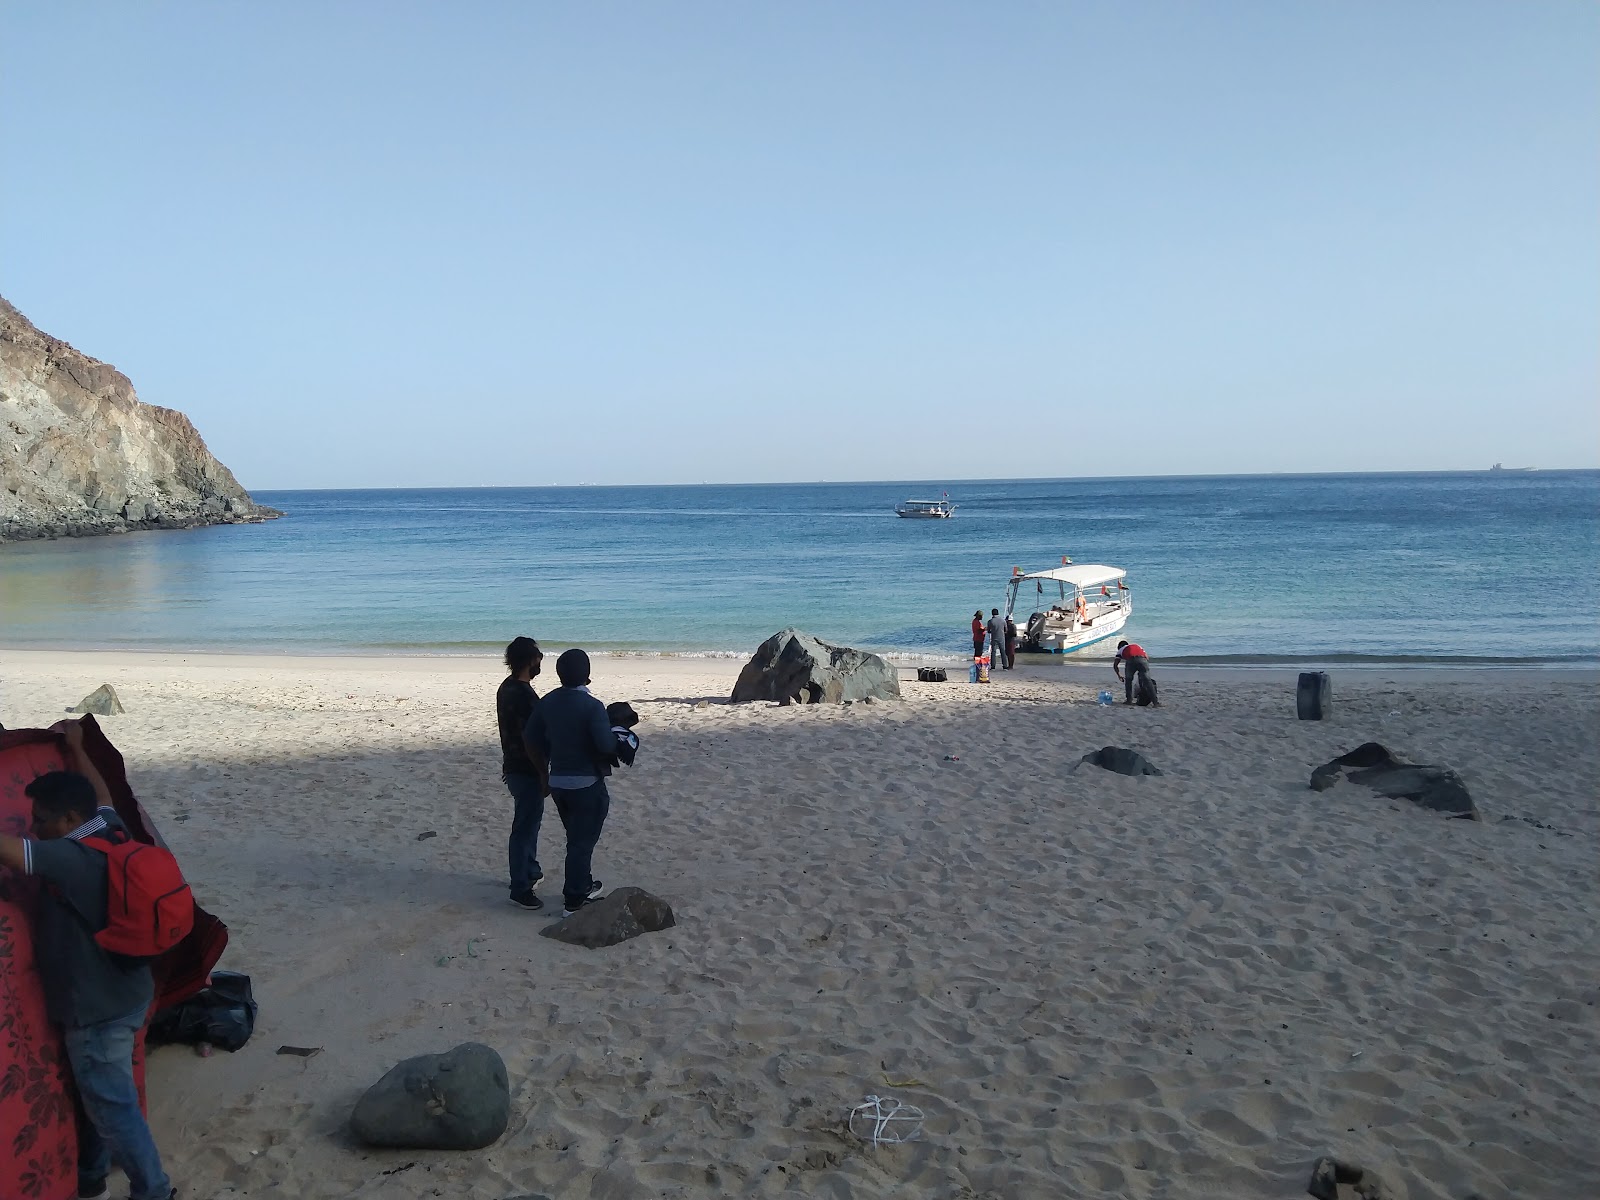 AlQalqali beach'in fotoğrafı turkuaz saf su yüzey ile